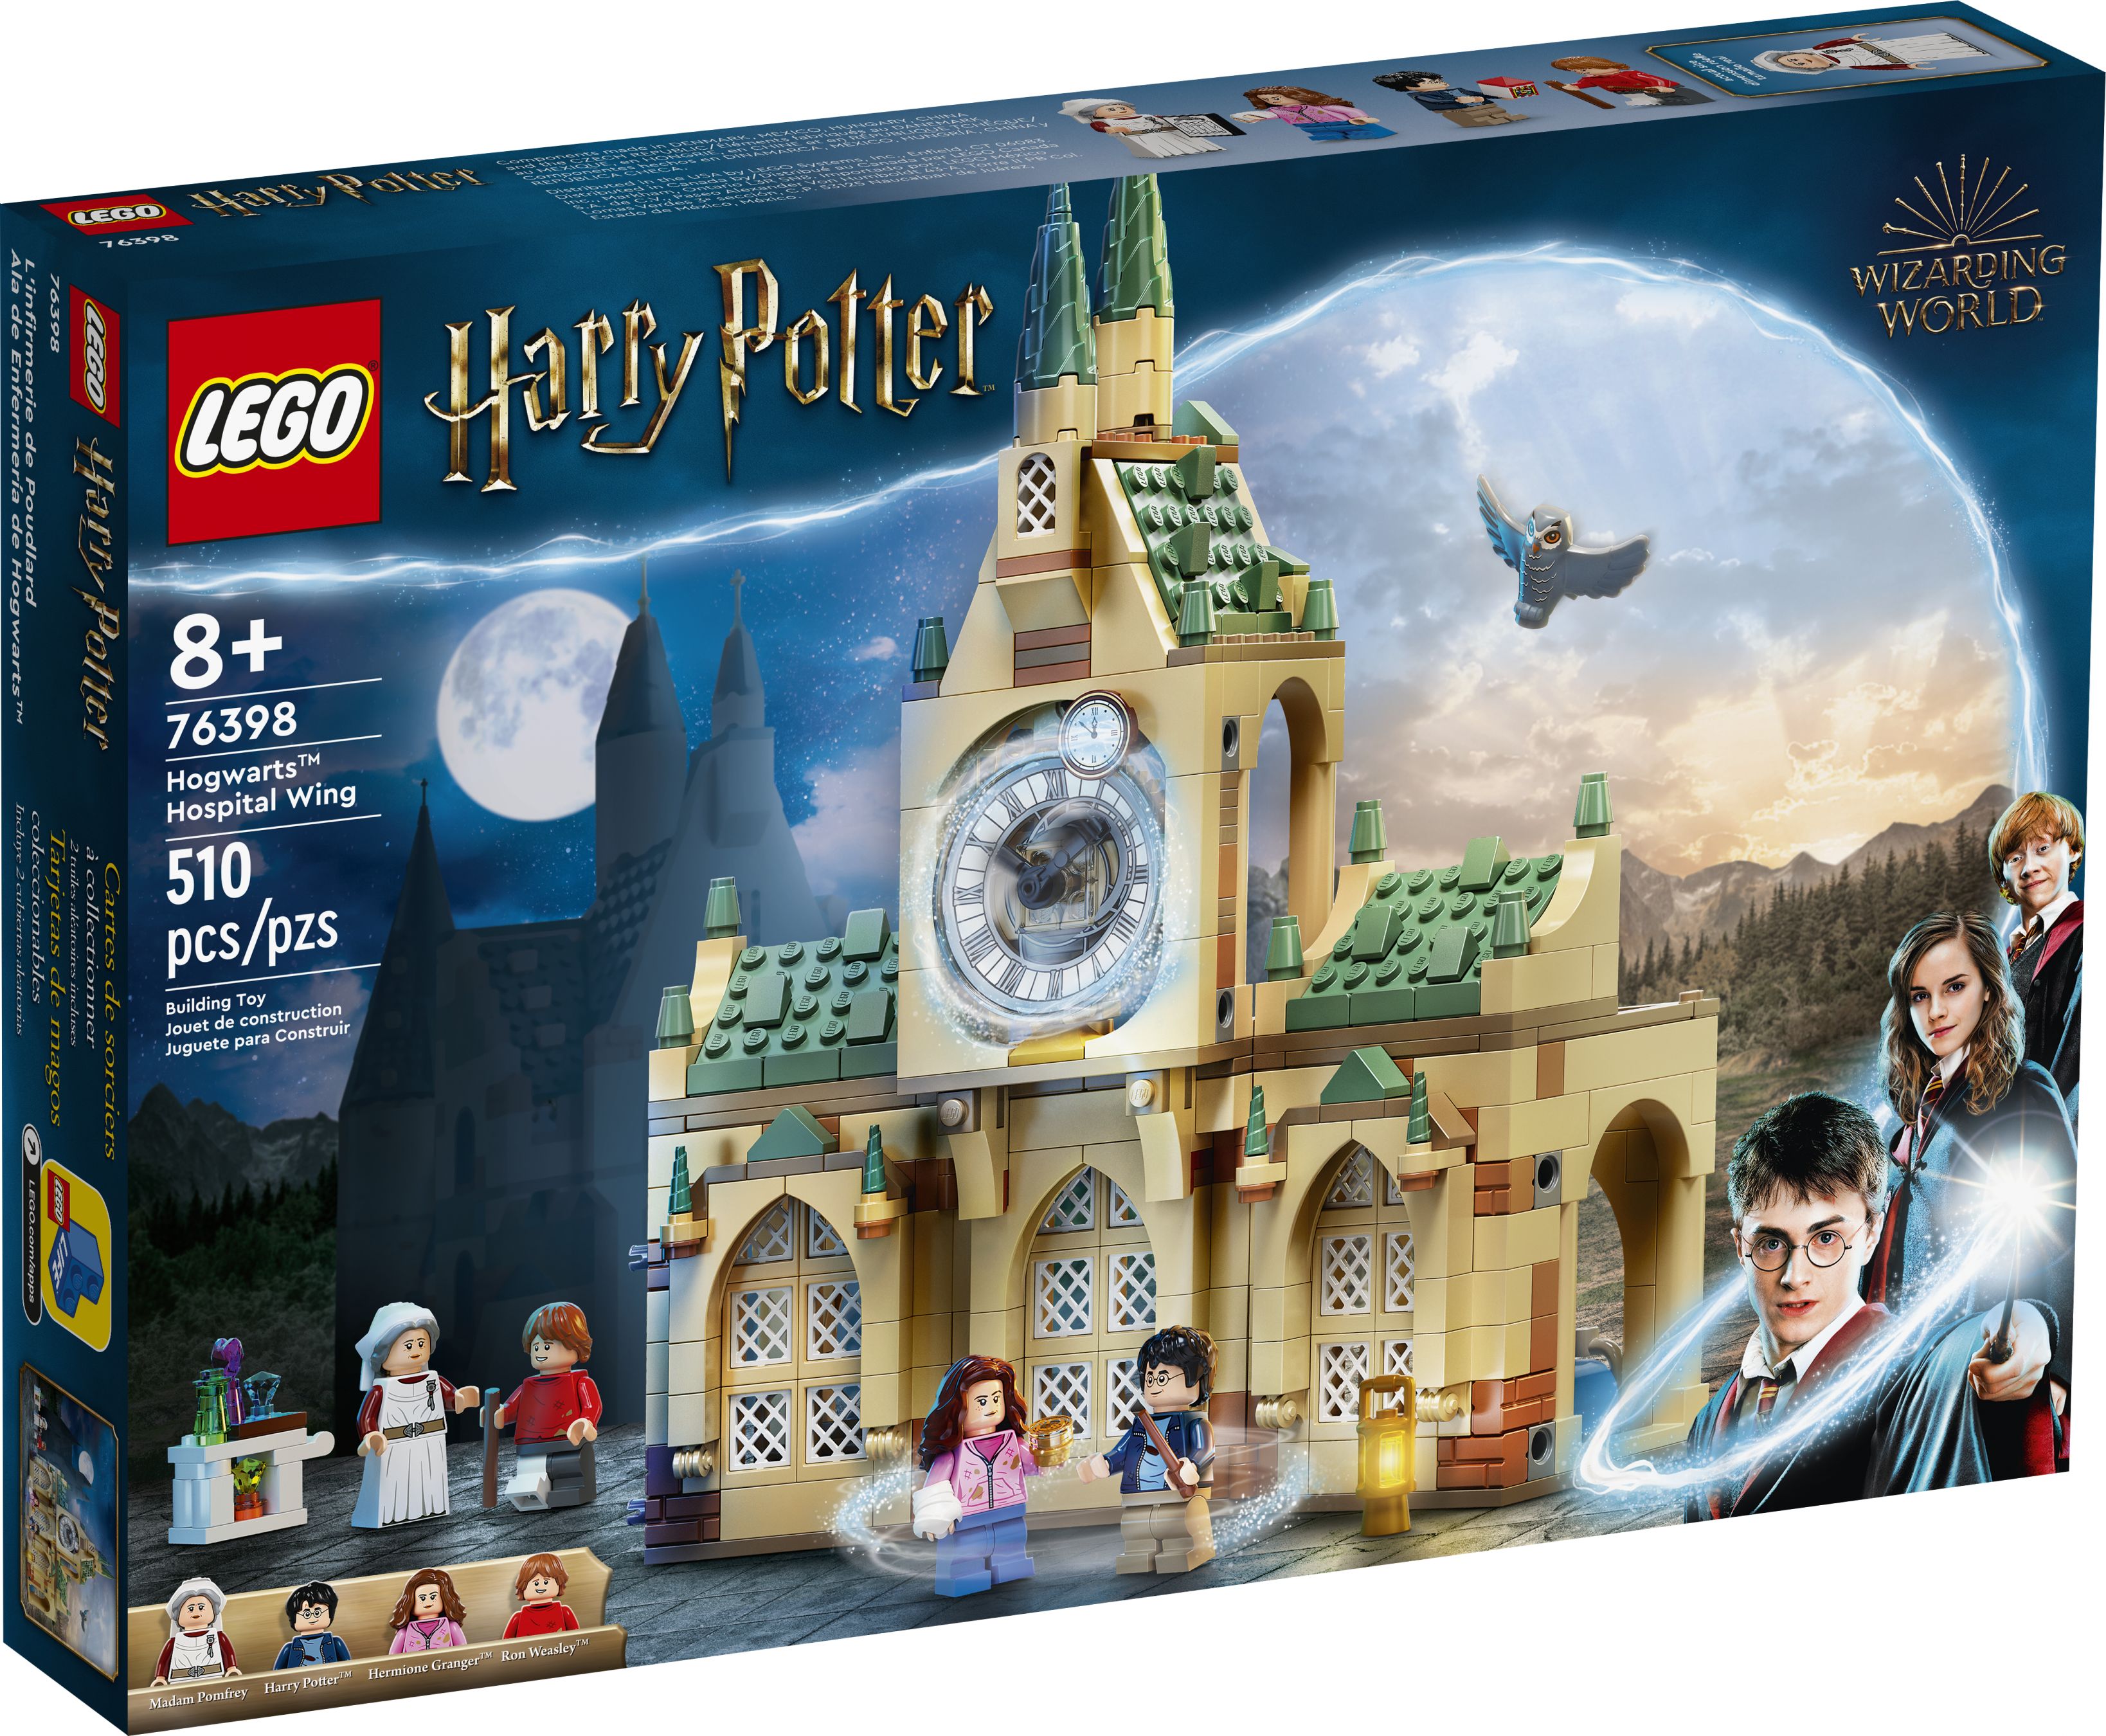 LEGO Harry Potter 76398 Hogwarts™ Krankenflügel LEGO_76398_Box1_v39.jpg